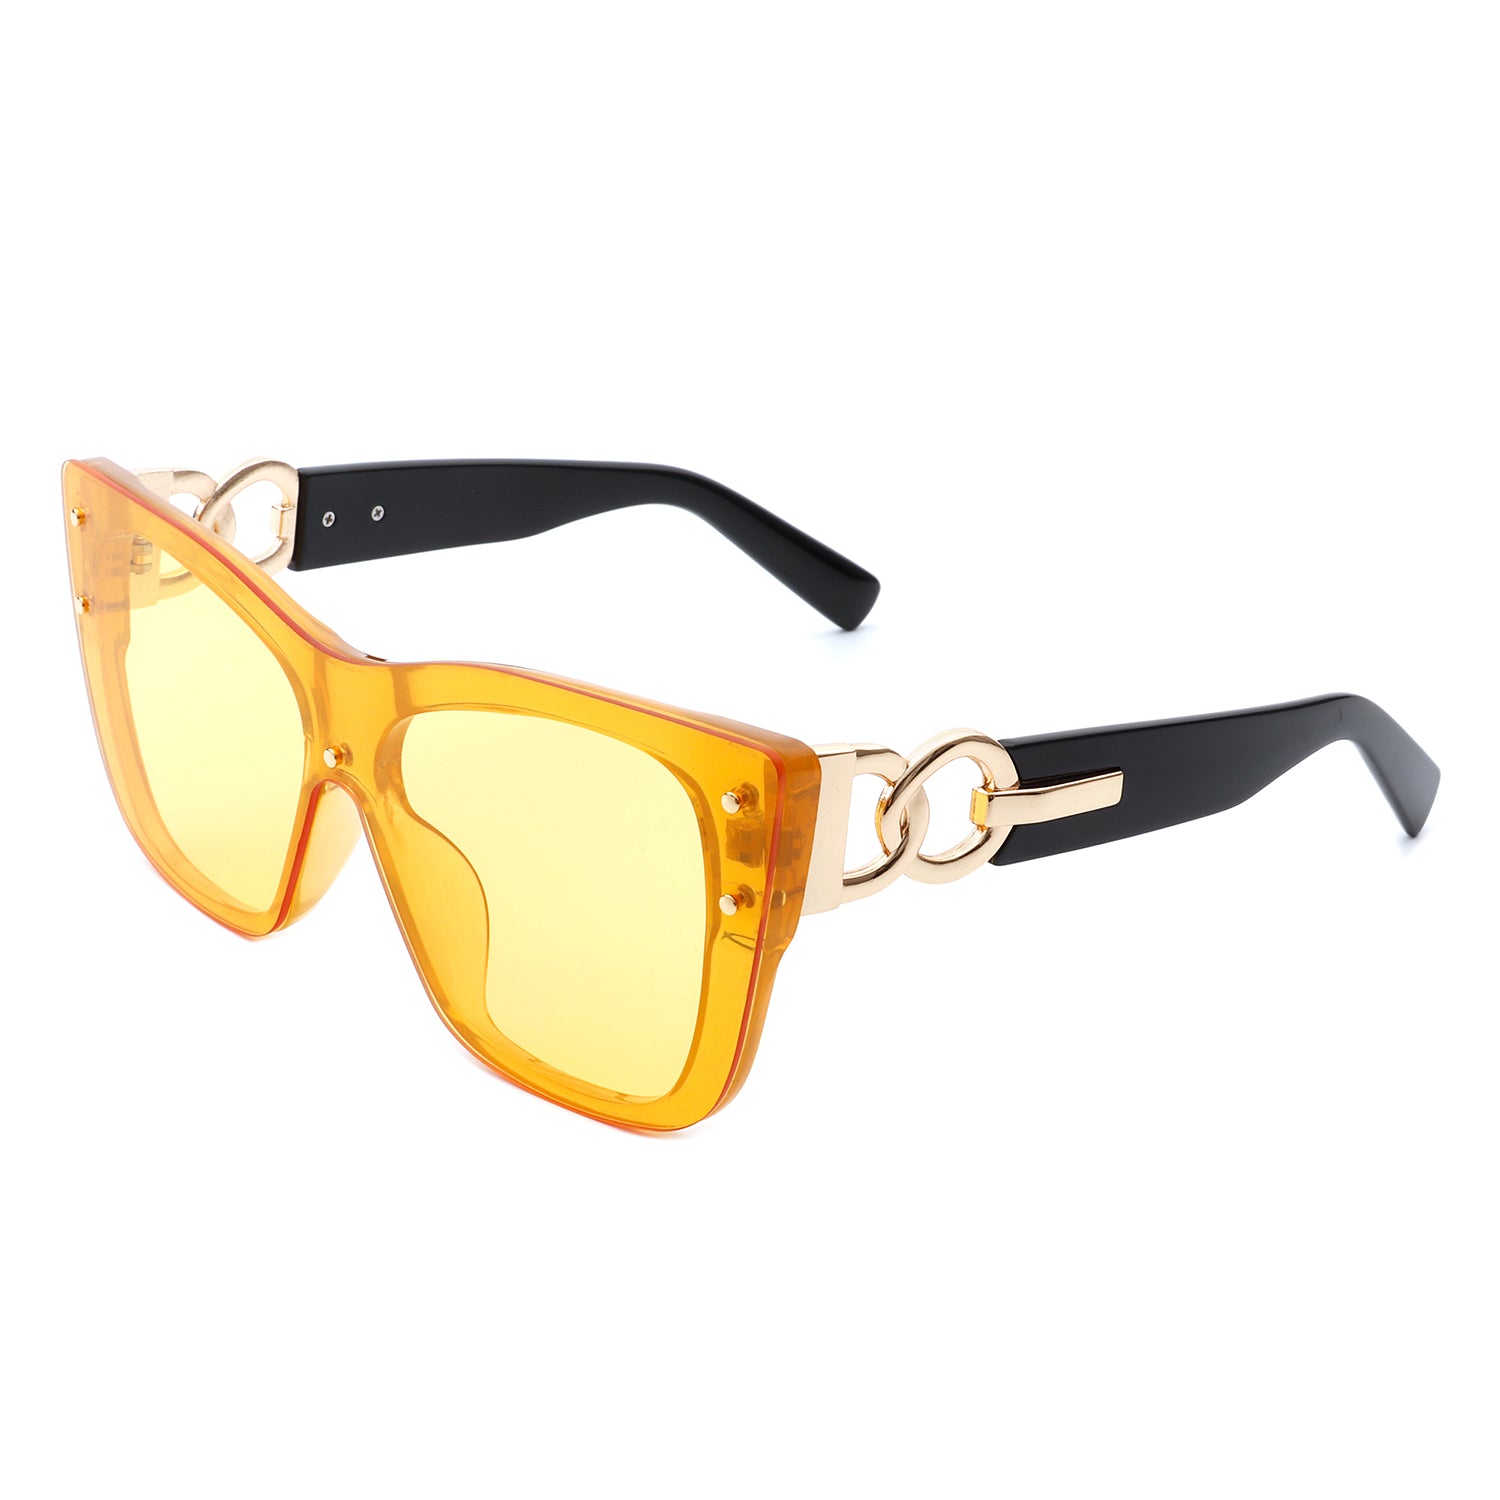 SUSTYA - Women Fashion Tinted Cat Eye Sunglasses Yellow